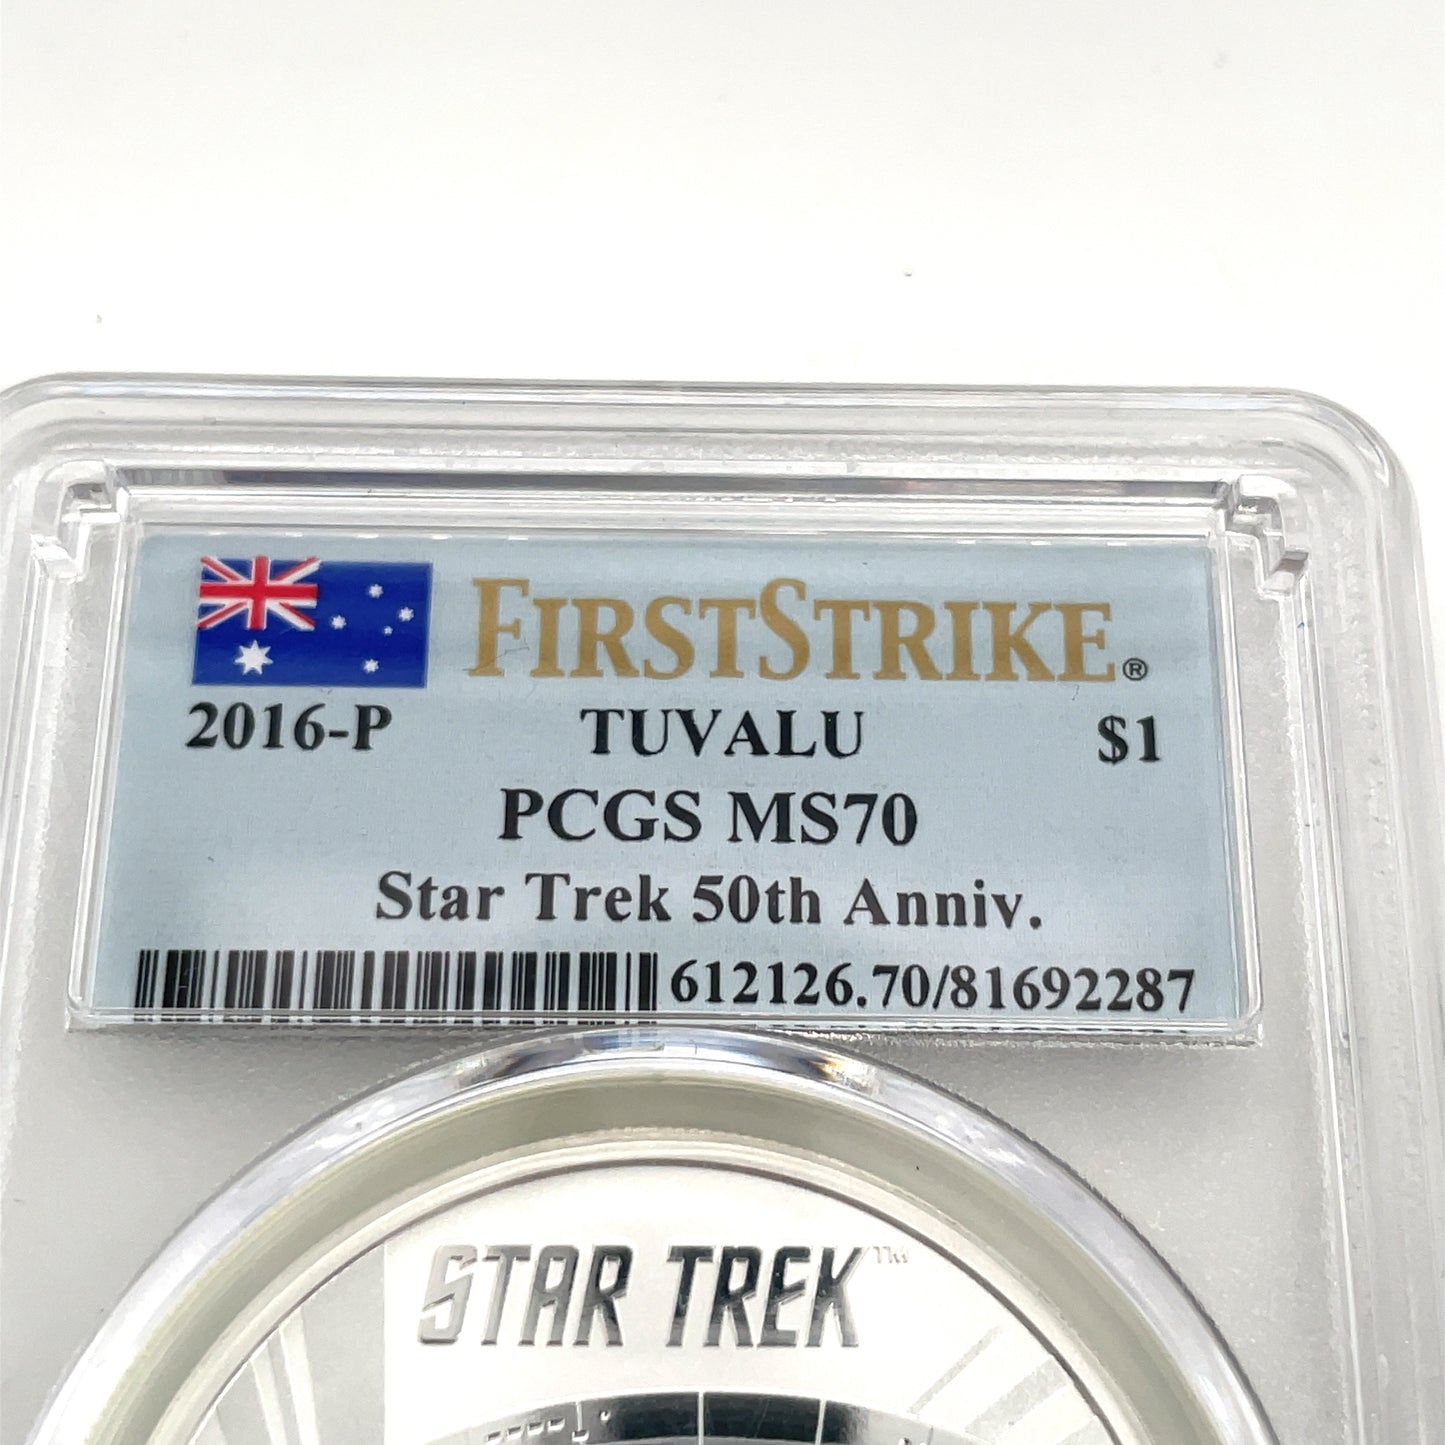 2016-P TUVALU First Strike Star Trek 50th Anniversary 1 oz Silver PCHS MS70